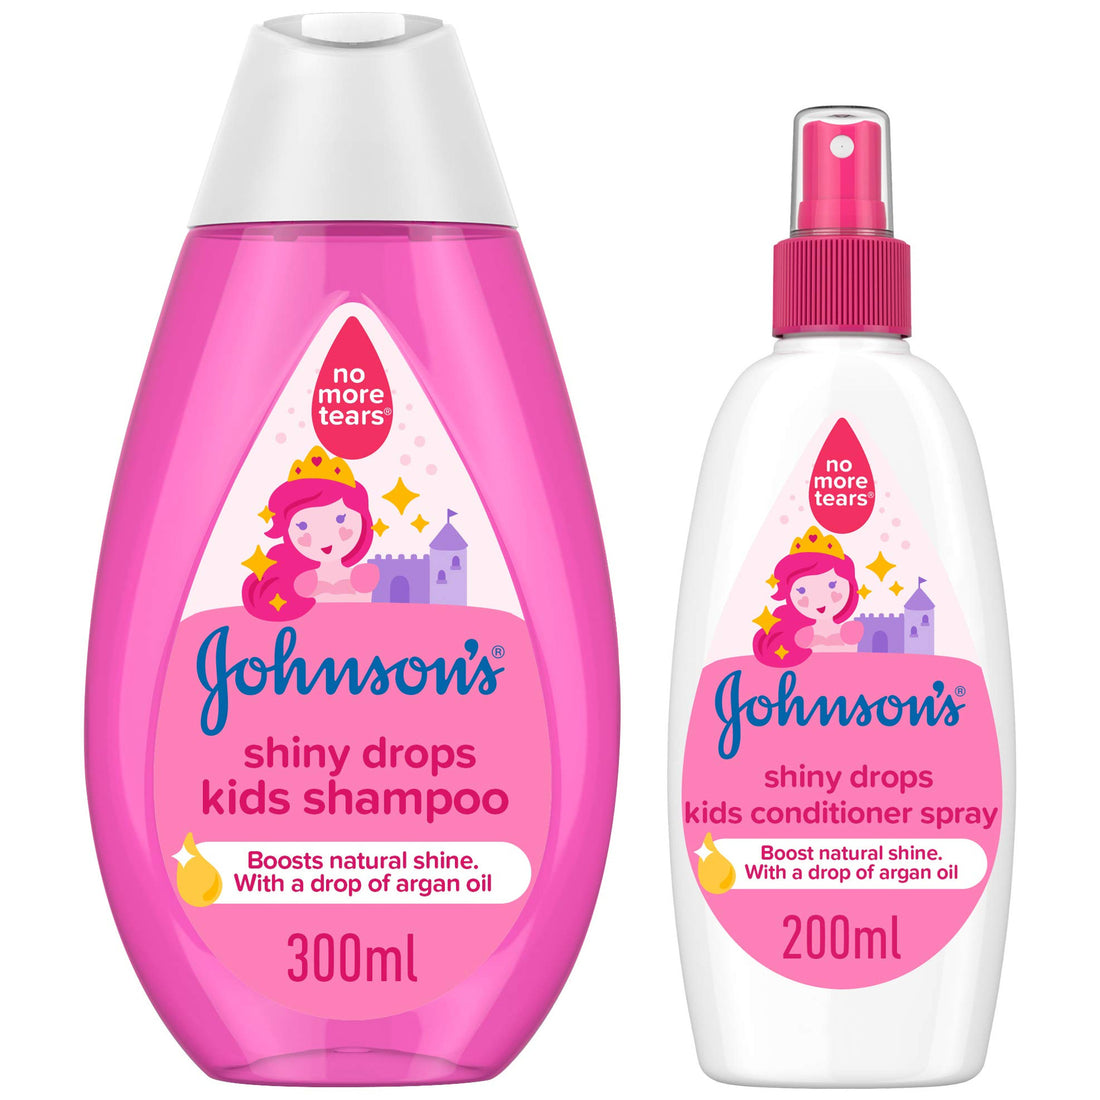 JOHNSON’S Shiny Drops Kids Shampoo, 300ml + Kids Conditioner Spray 200ml